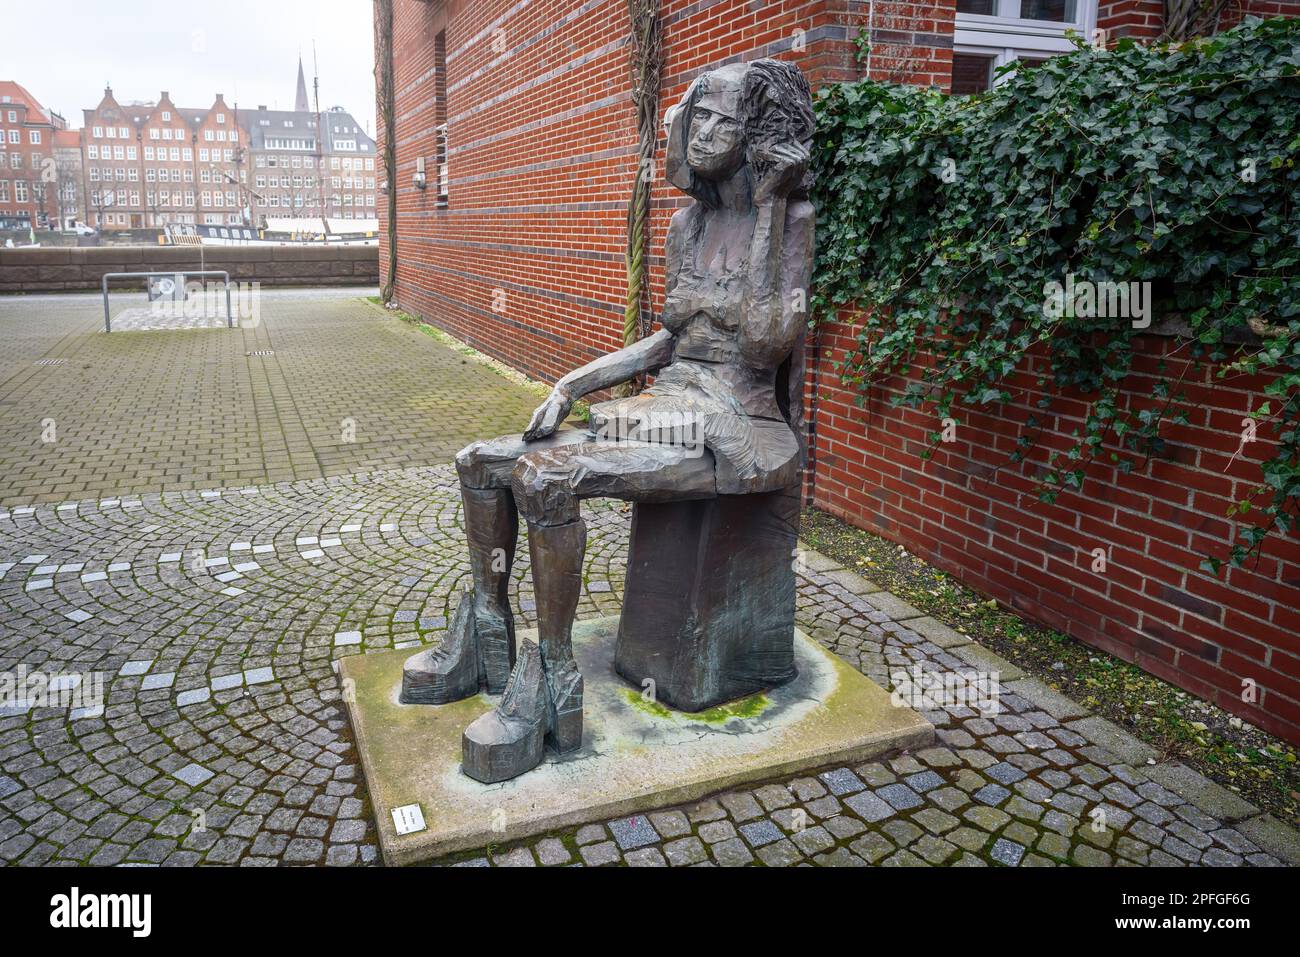 Grosses Madchen (Big Girl) Sculpture by Klaus Effern at Teerhof - Bremen, Germany Stock Photo